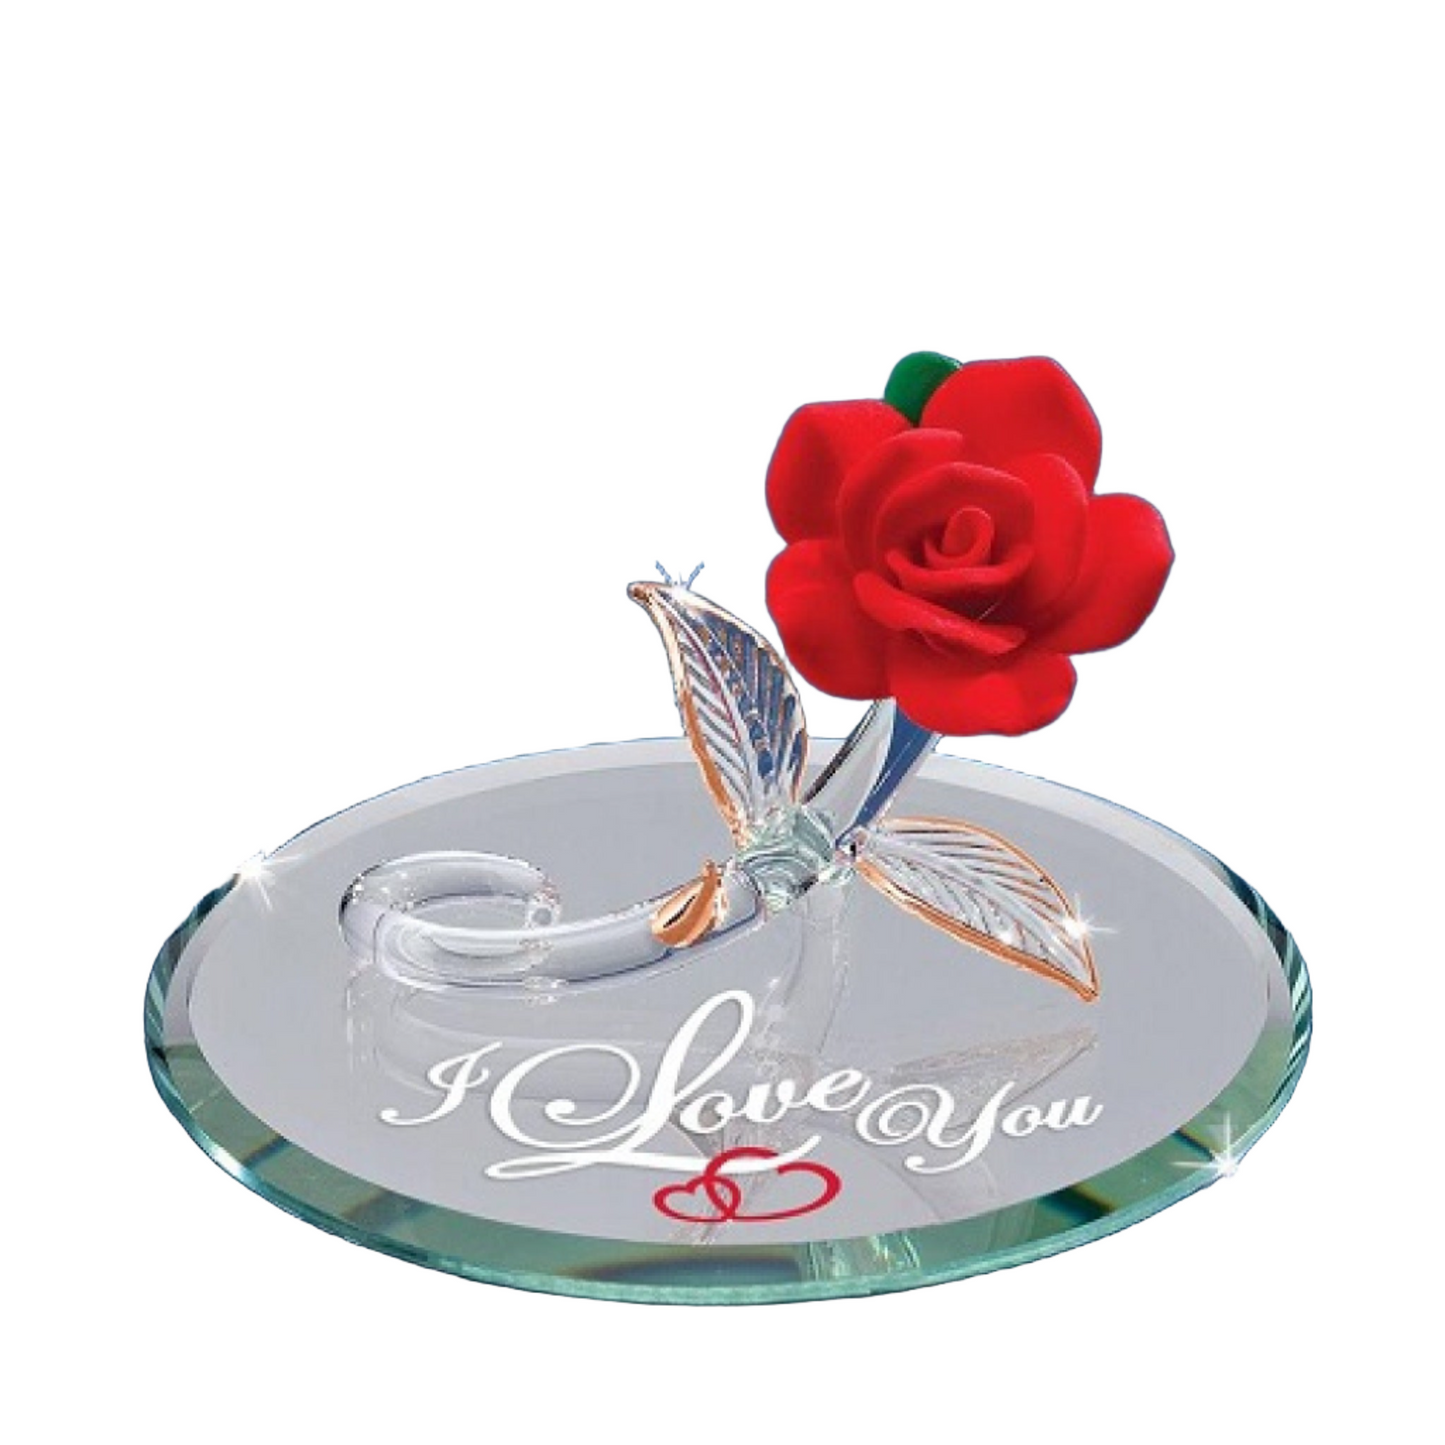 Glass Baron "I Love You" Red Rose Figurine